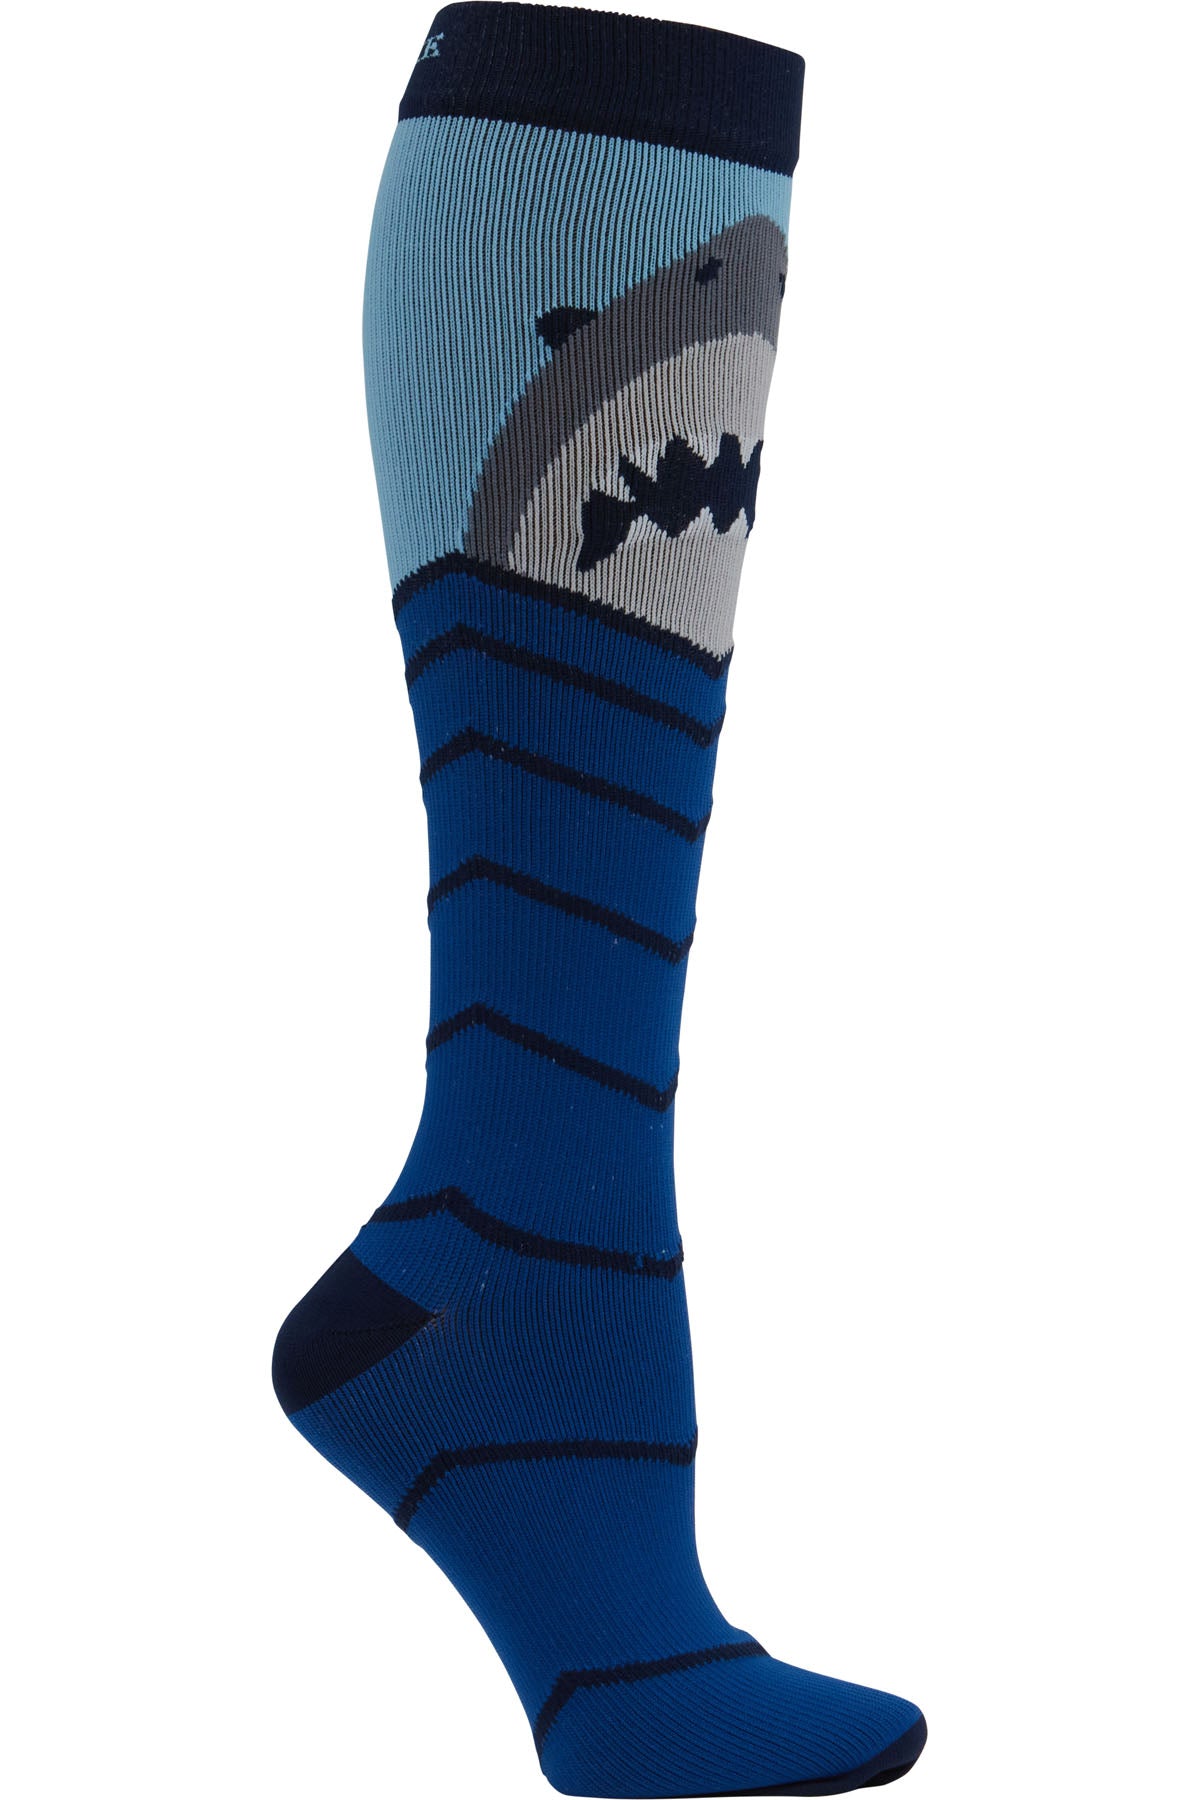 Men's Compression Socks 10-15mmHg Men's Compression Socks Cherokee Legwear Shark Attack  